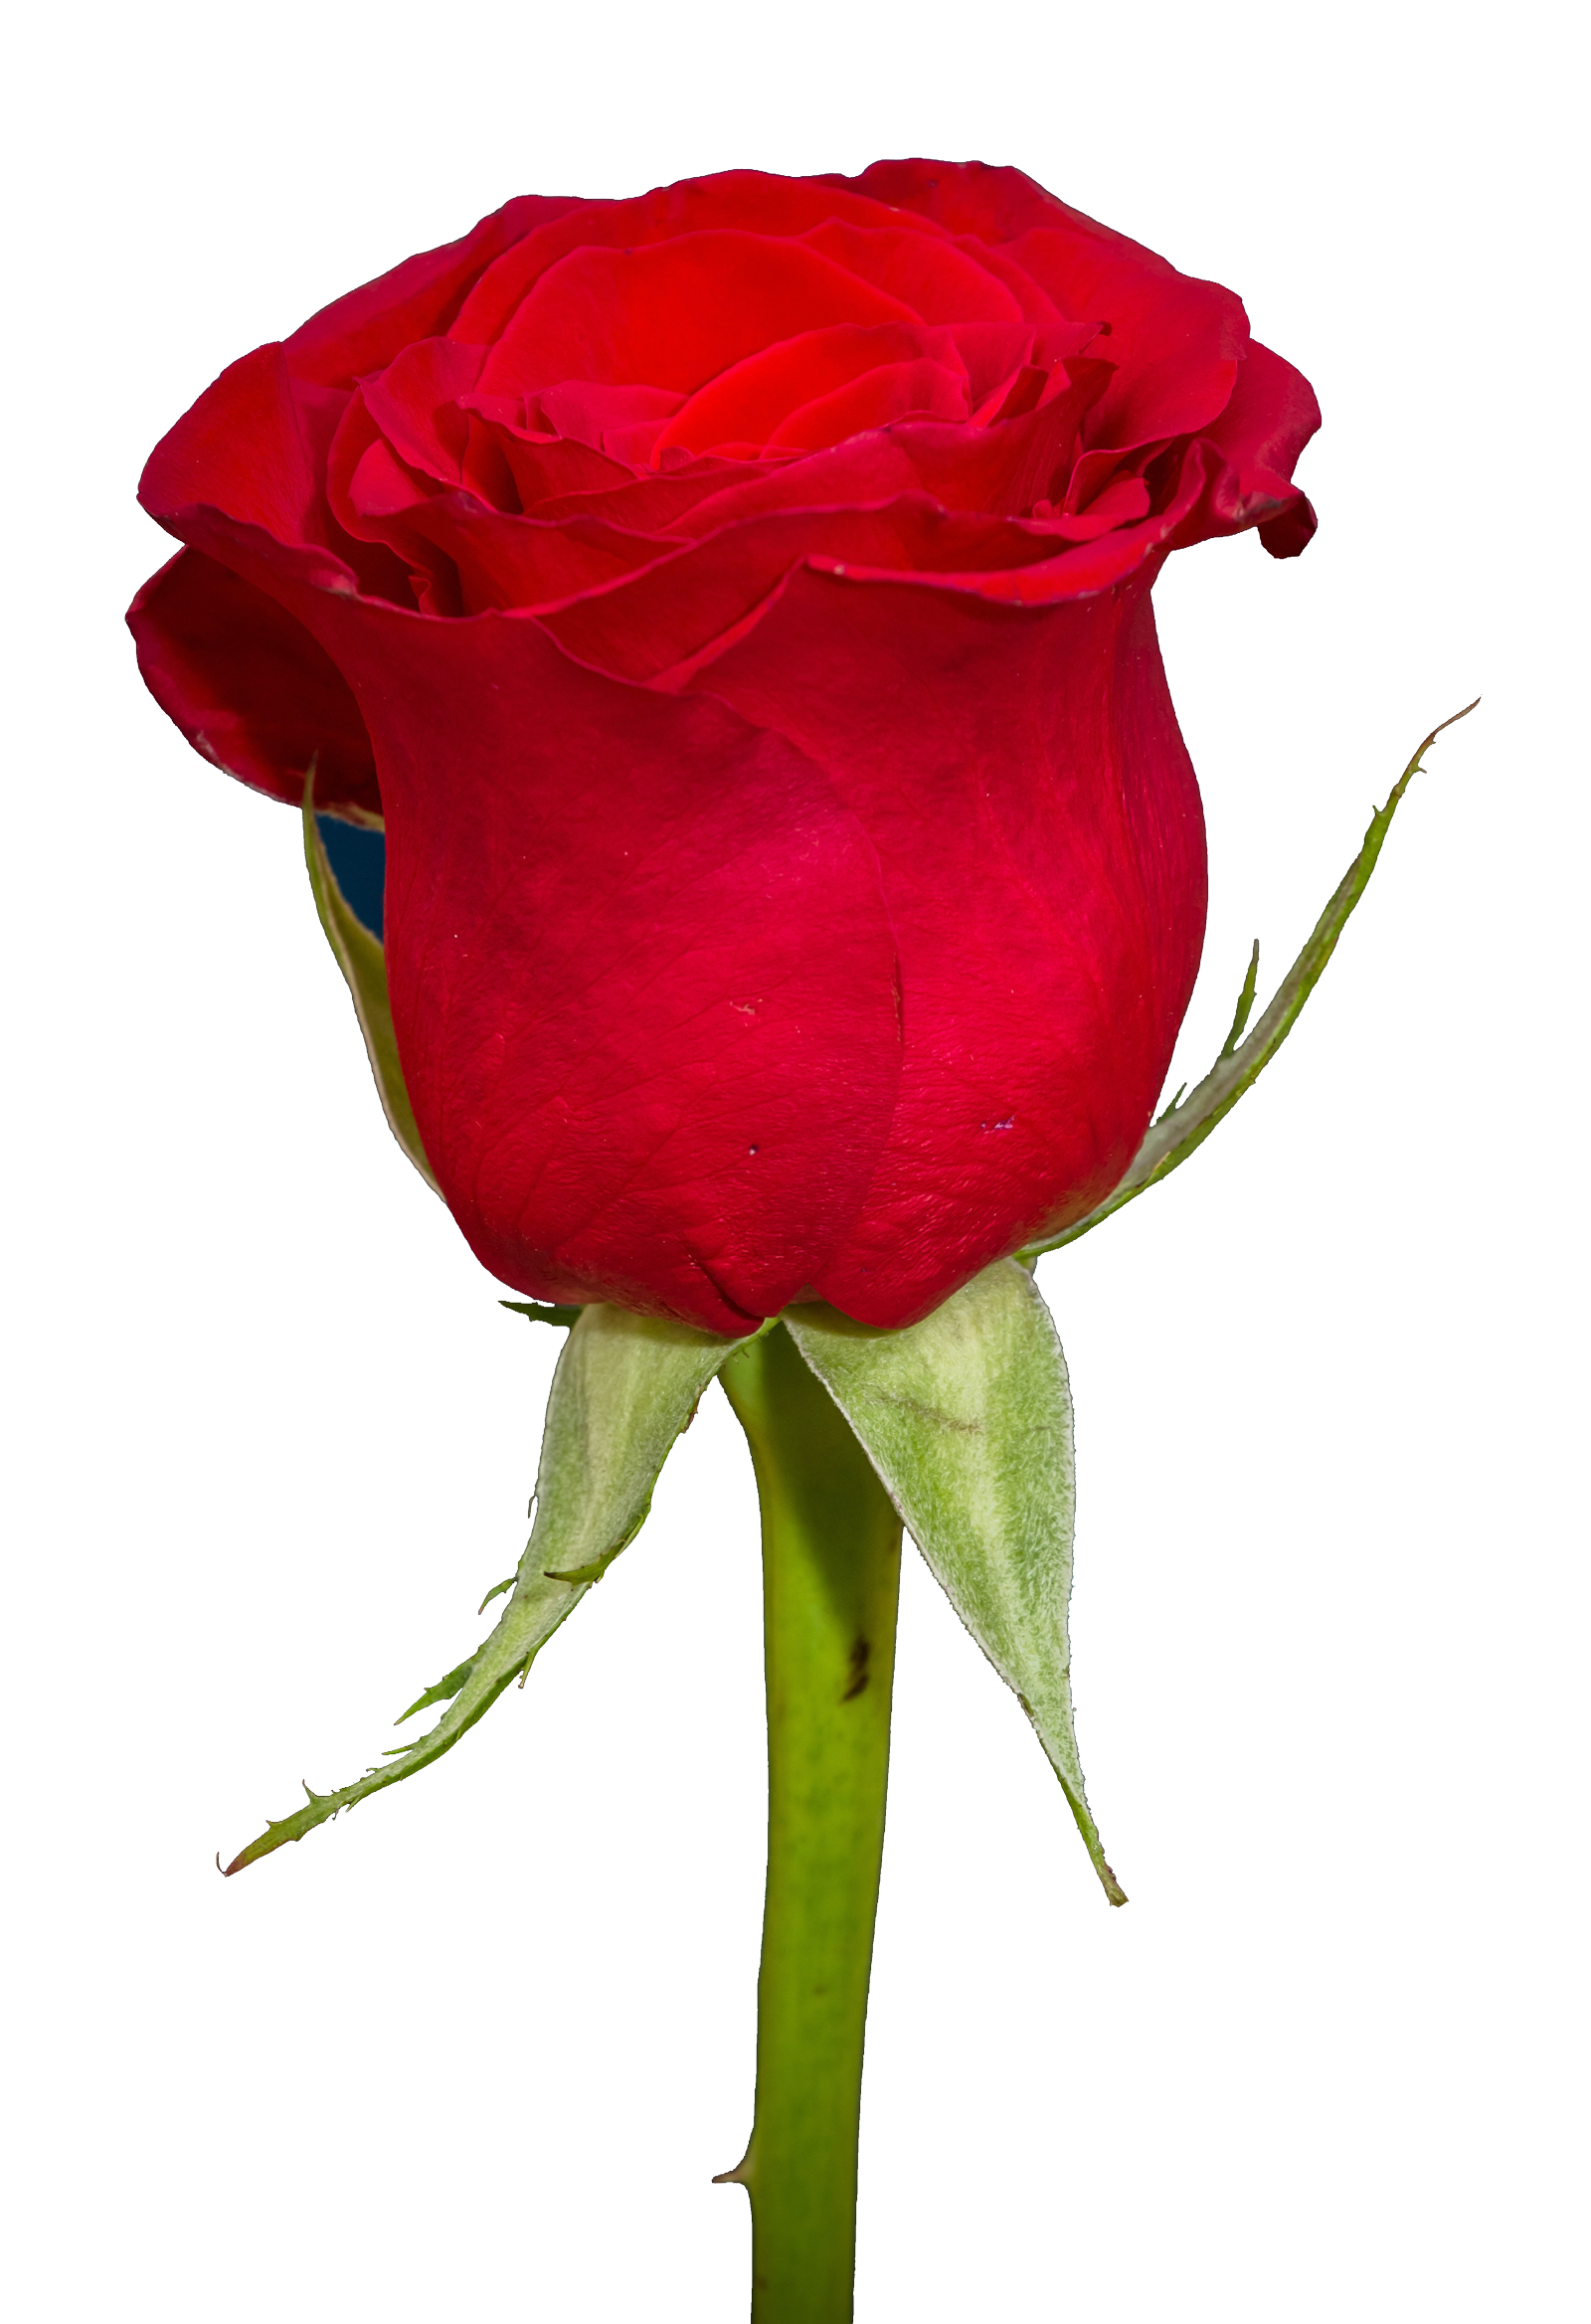 carta da parati gulab ka phool,rose da giardino,petalo,rosso,rosa,rosa